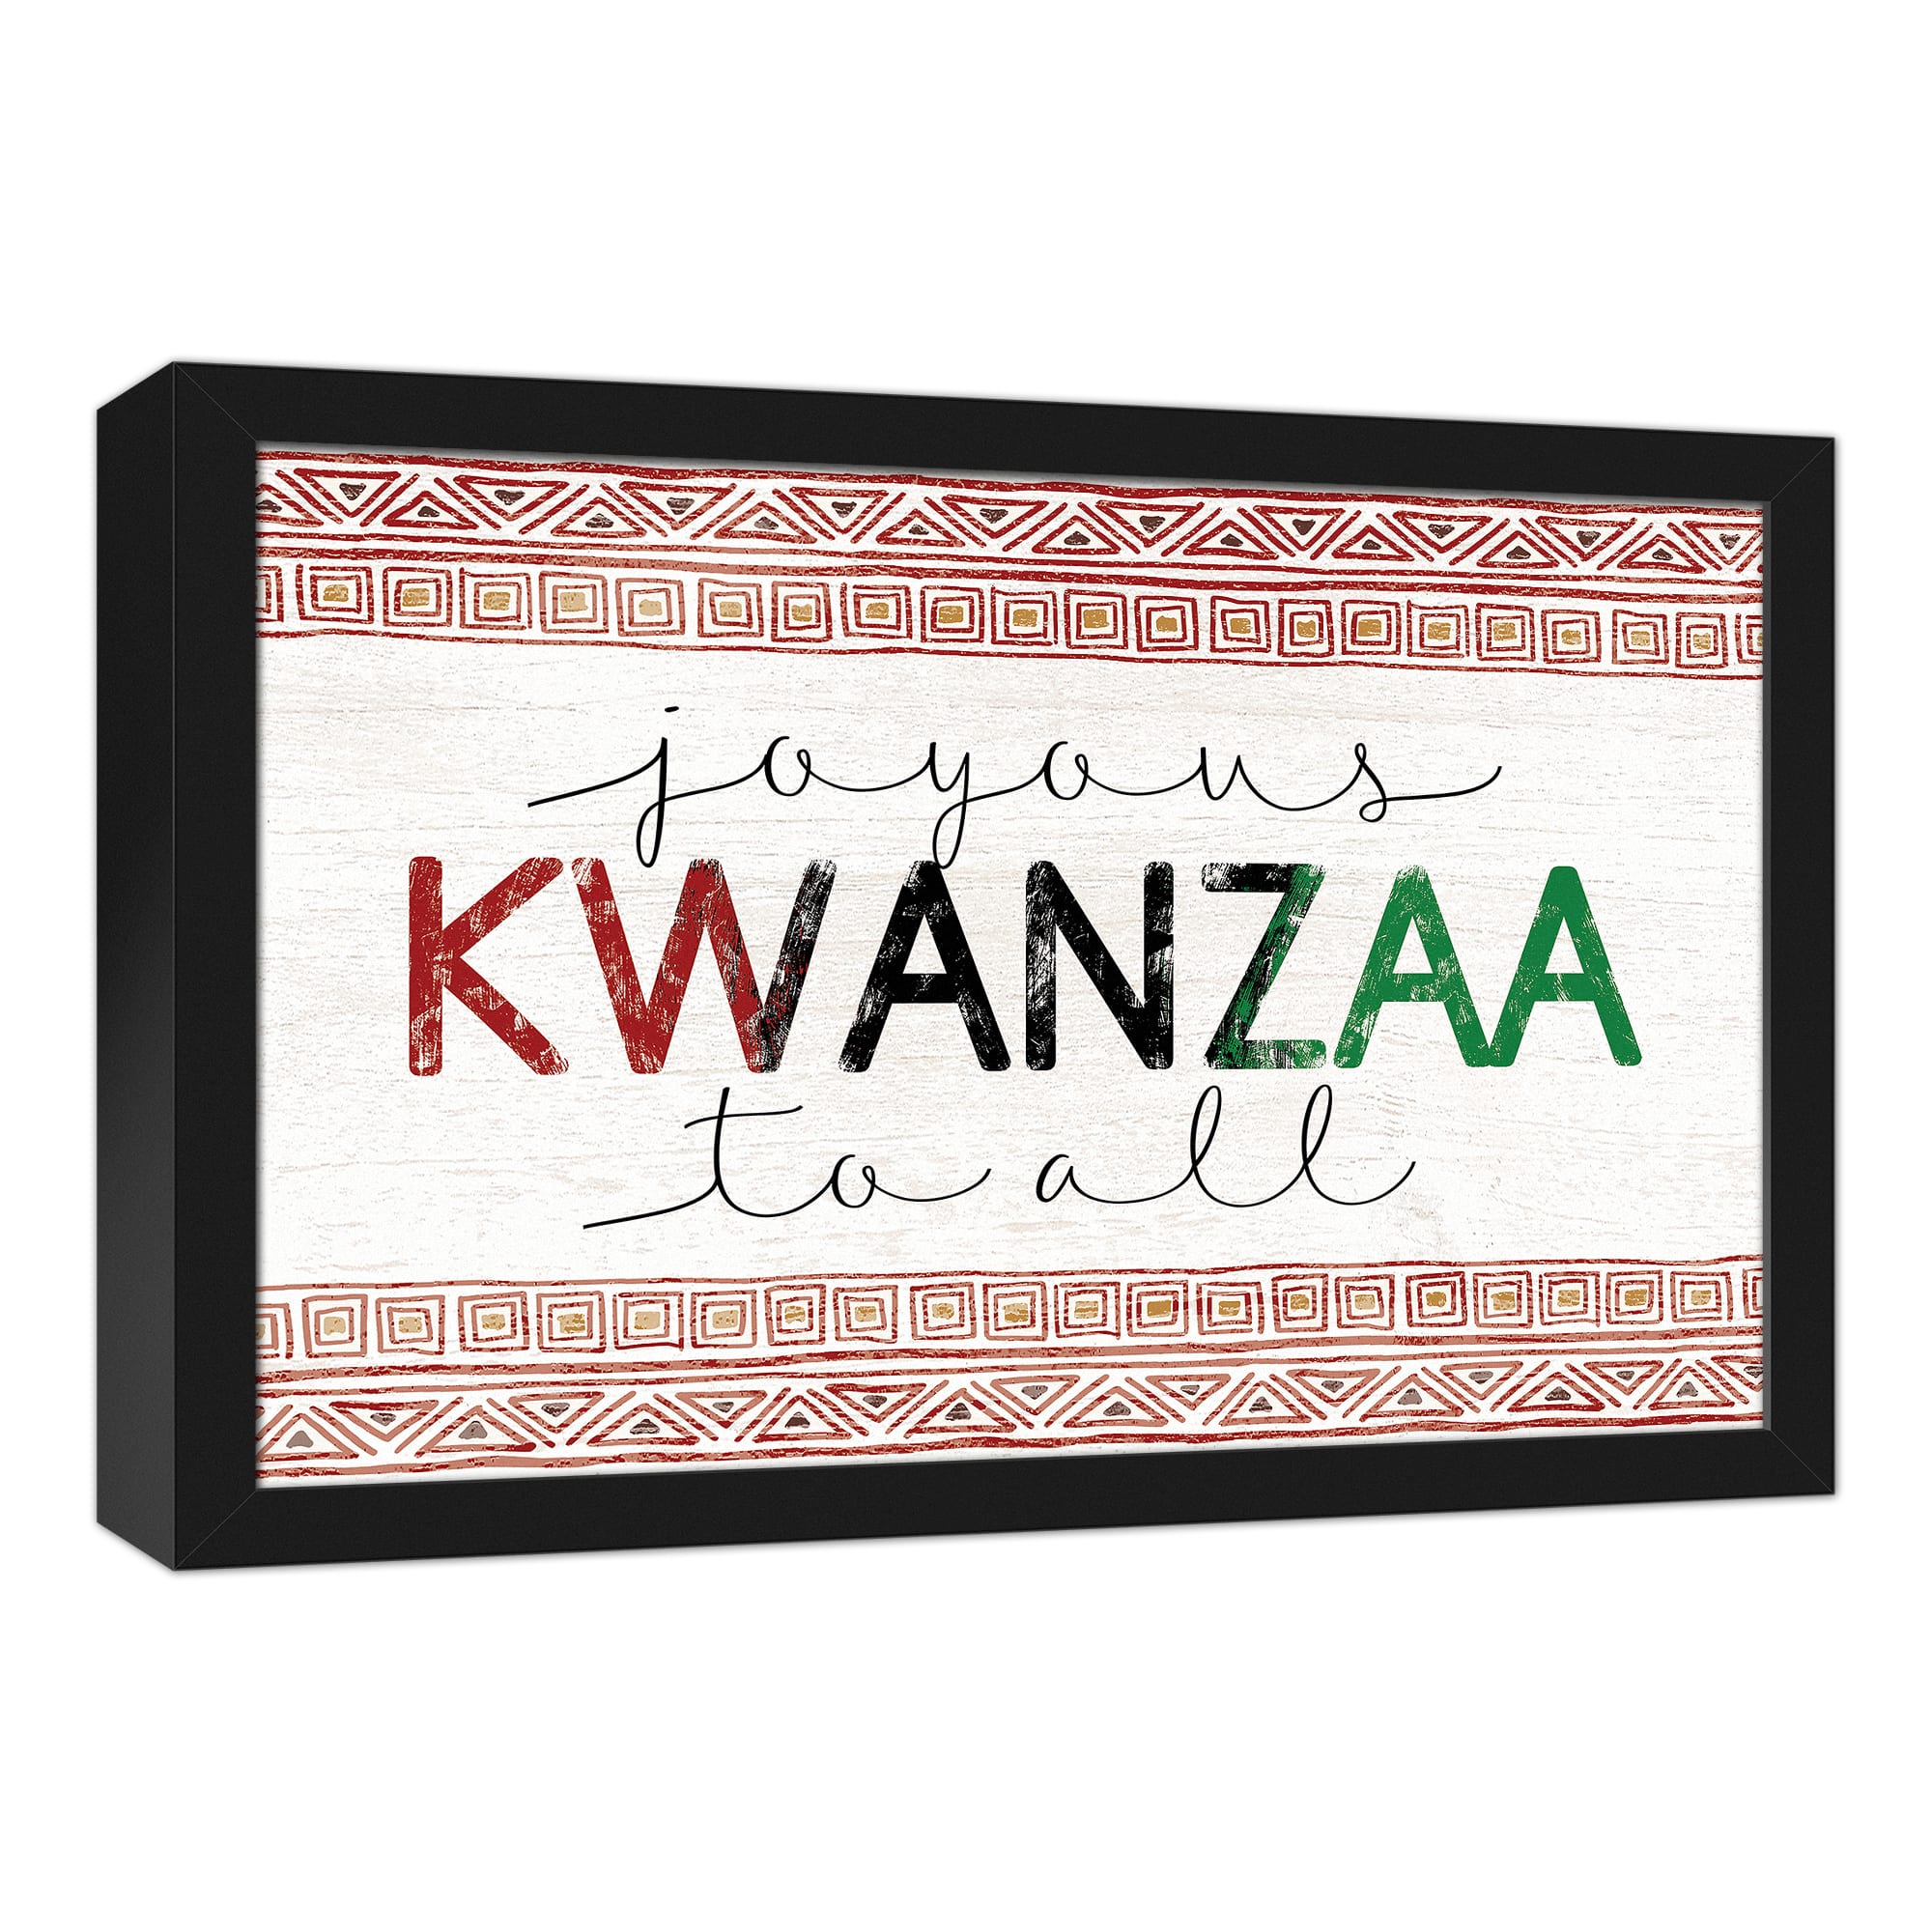 Joyous Kwanzaa To All Black Framed Canvas Art